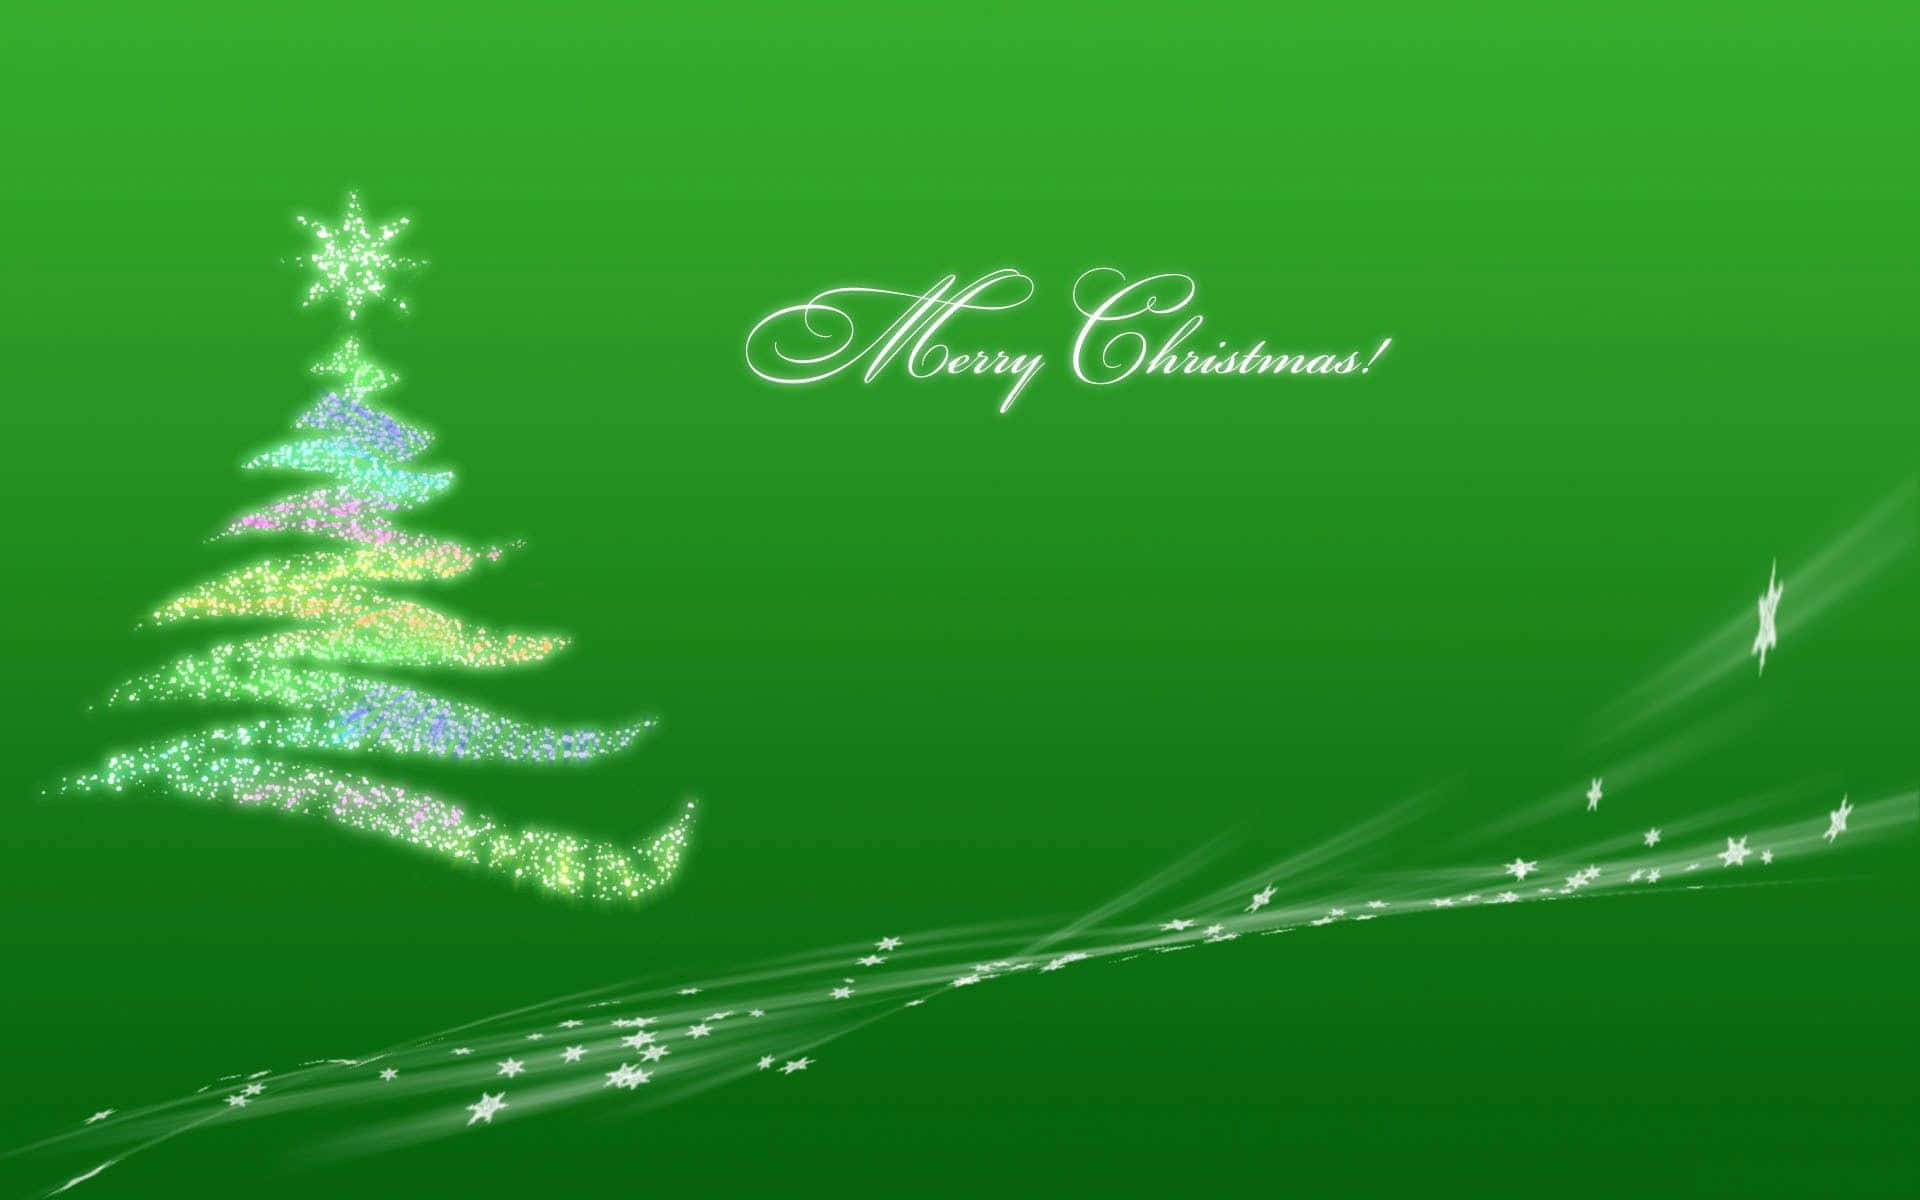 Merry Christmas Wallpaper - Green Background Wallpaper